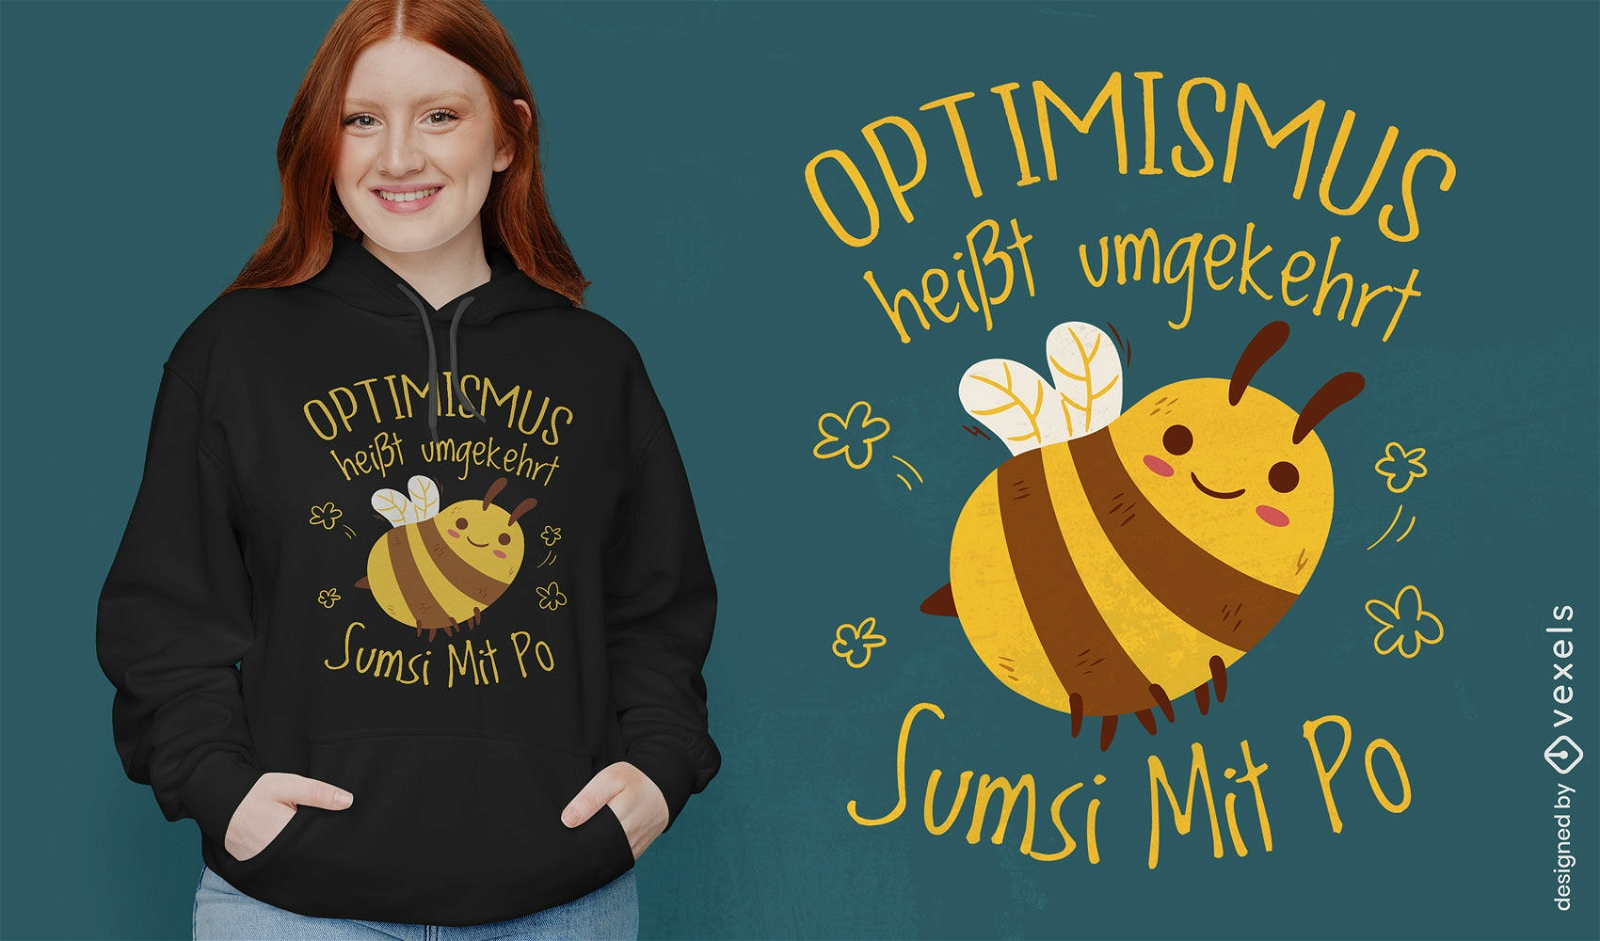 Optimism bee quote t-shirt design